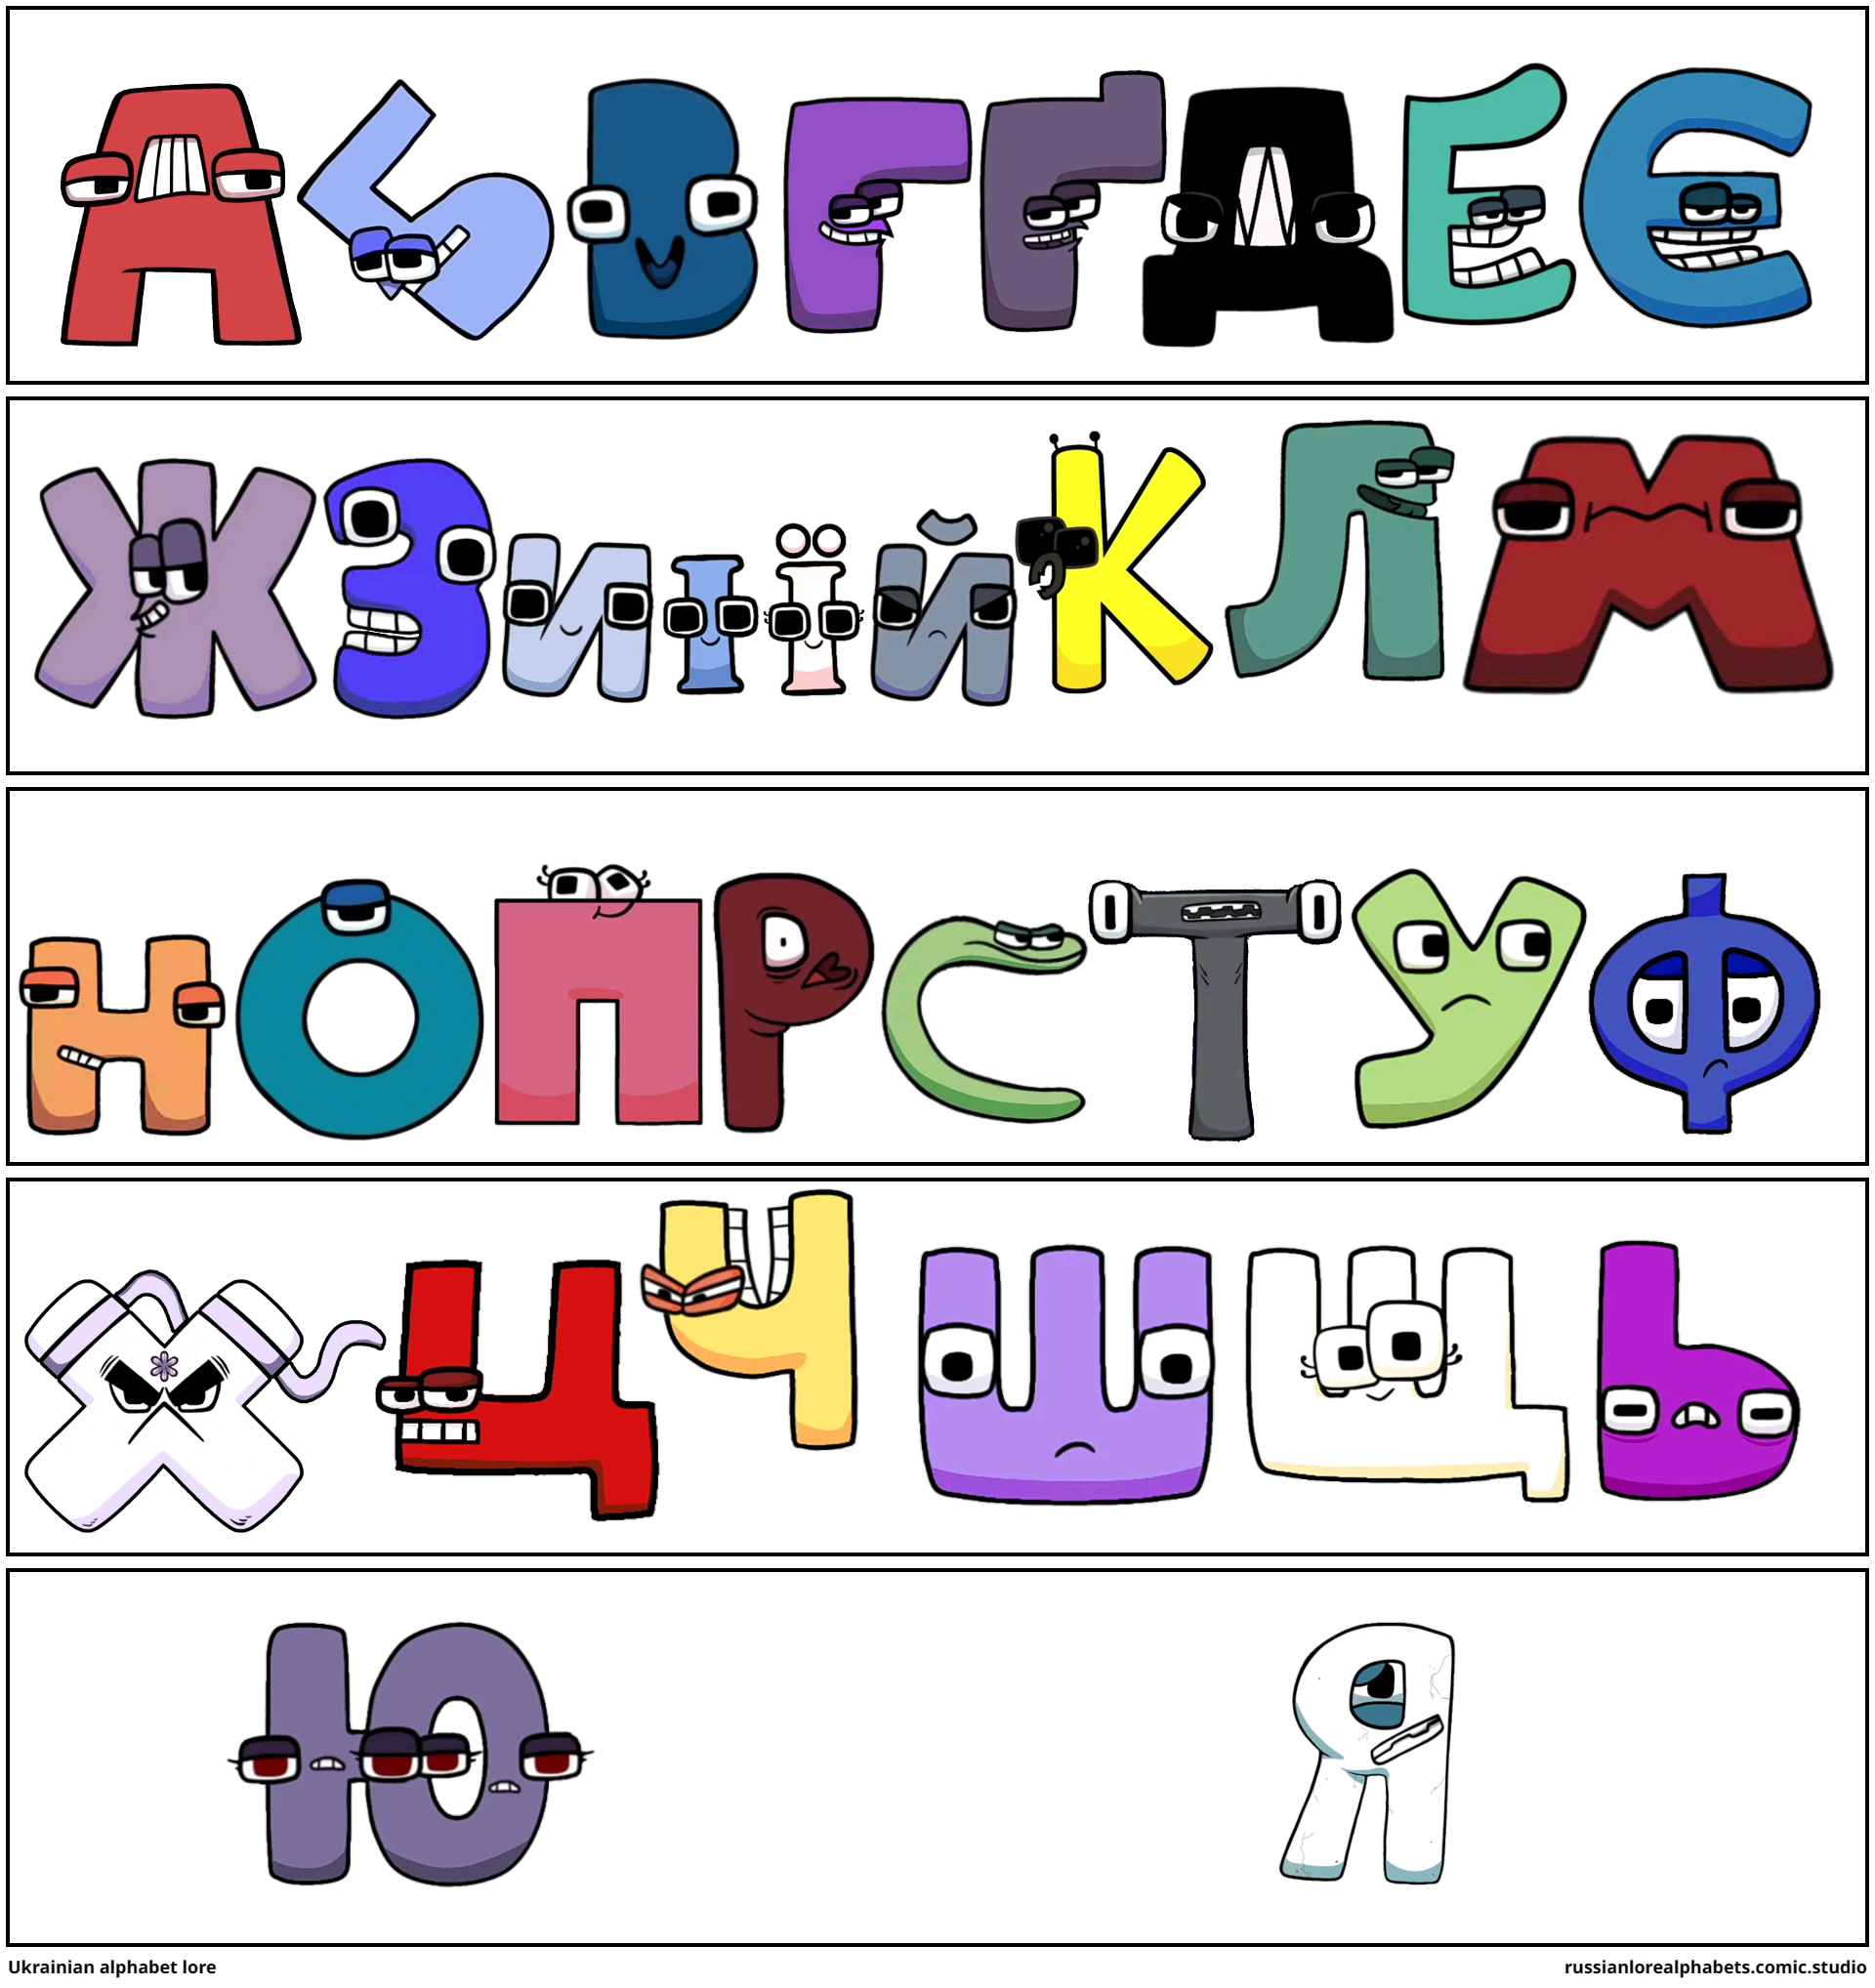 Alphabet Lore but in Ukrainian 